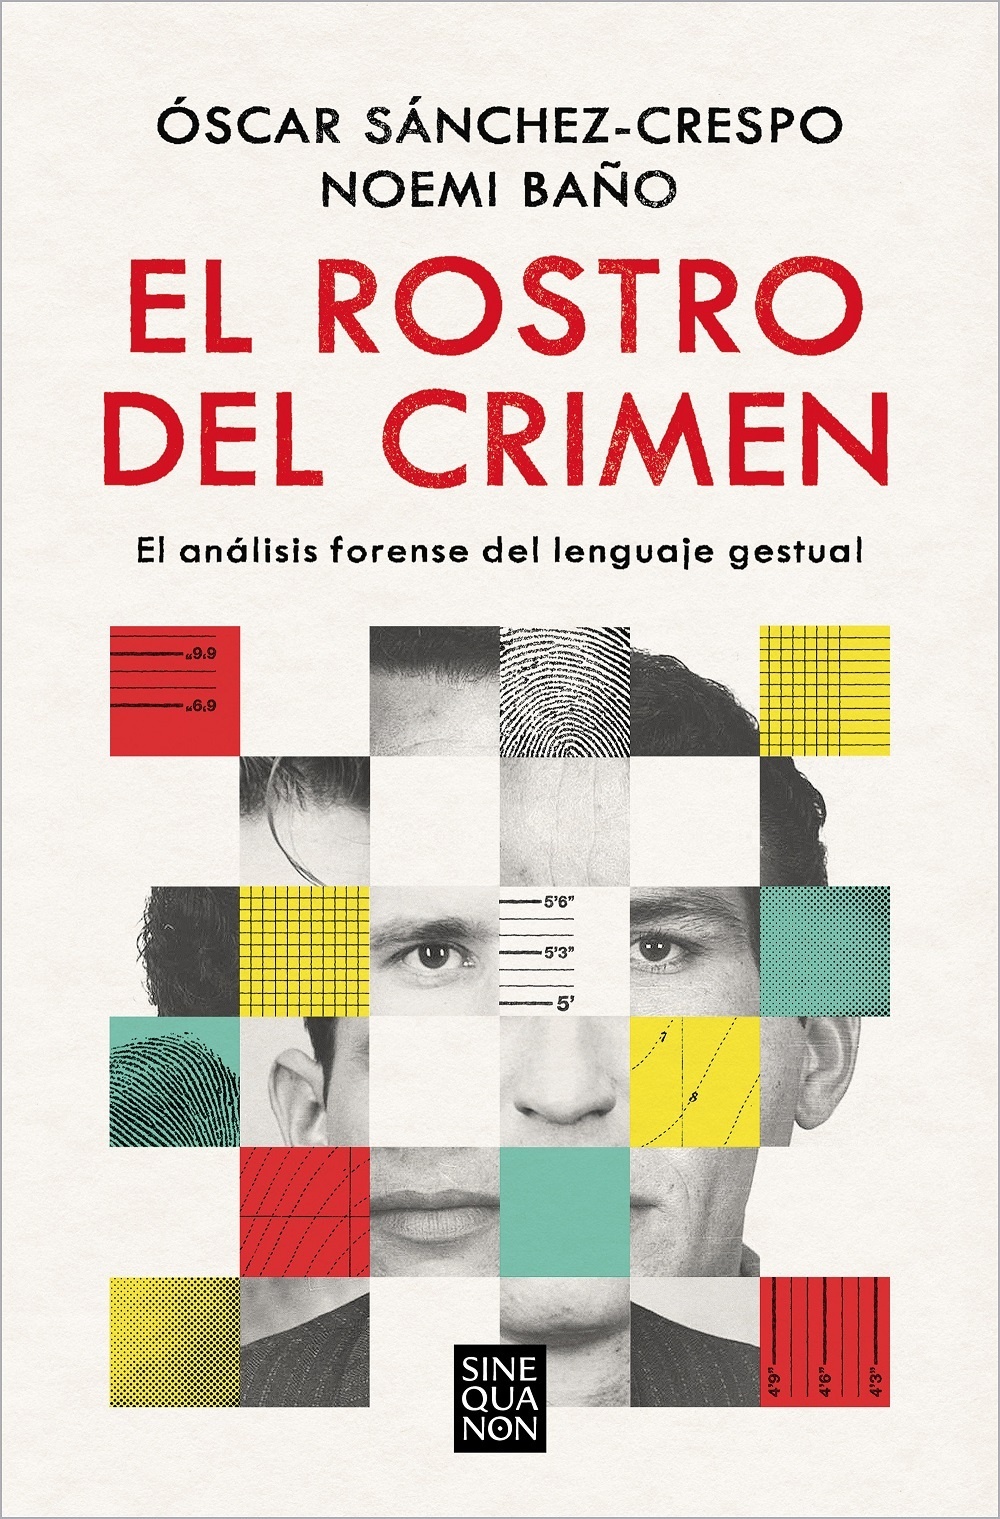 Rostro del crimen, El "El análisis forense del lenguaje gestual". 